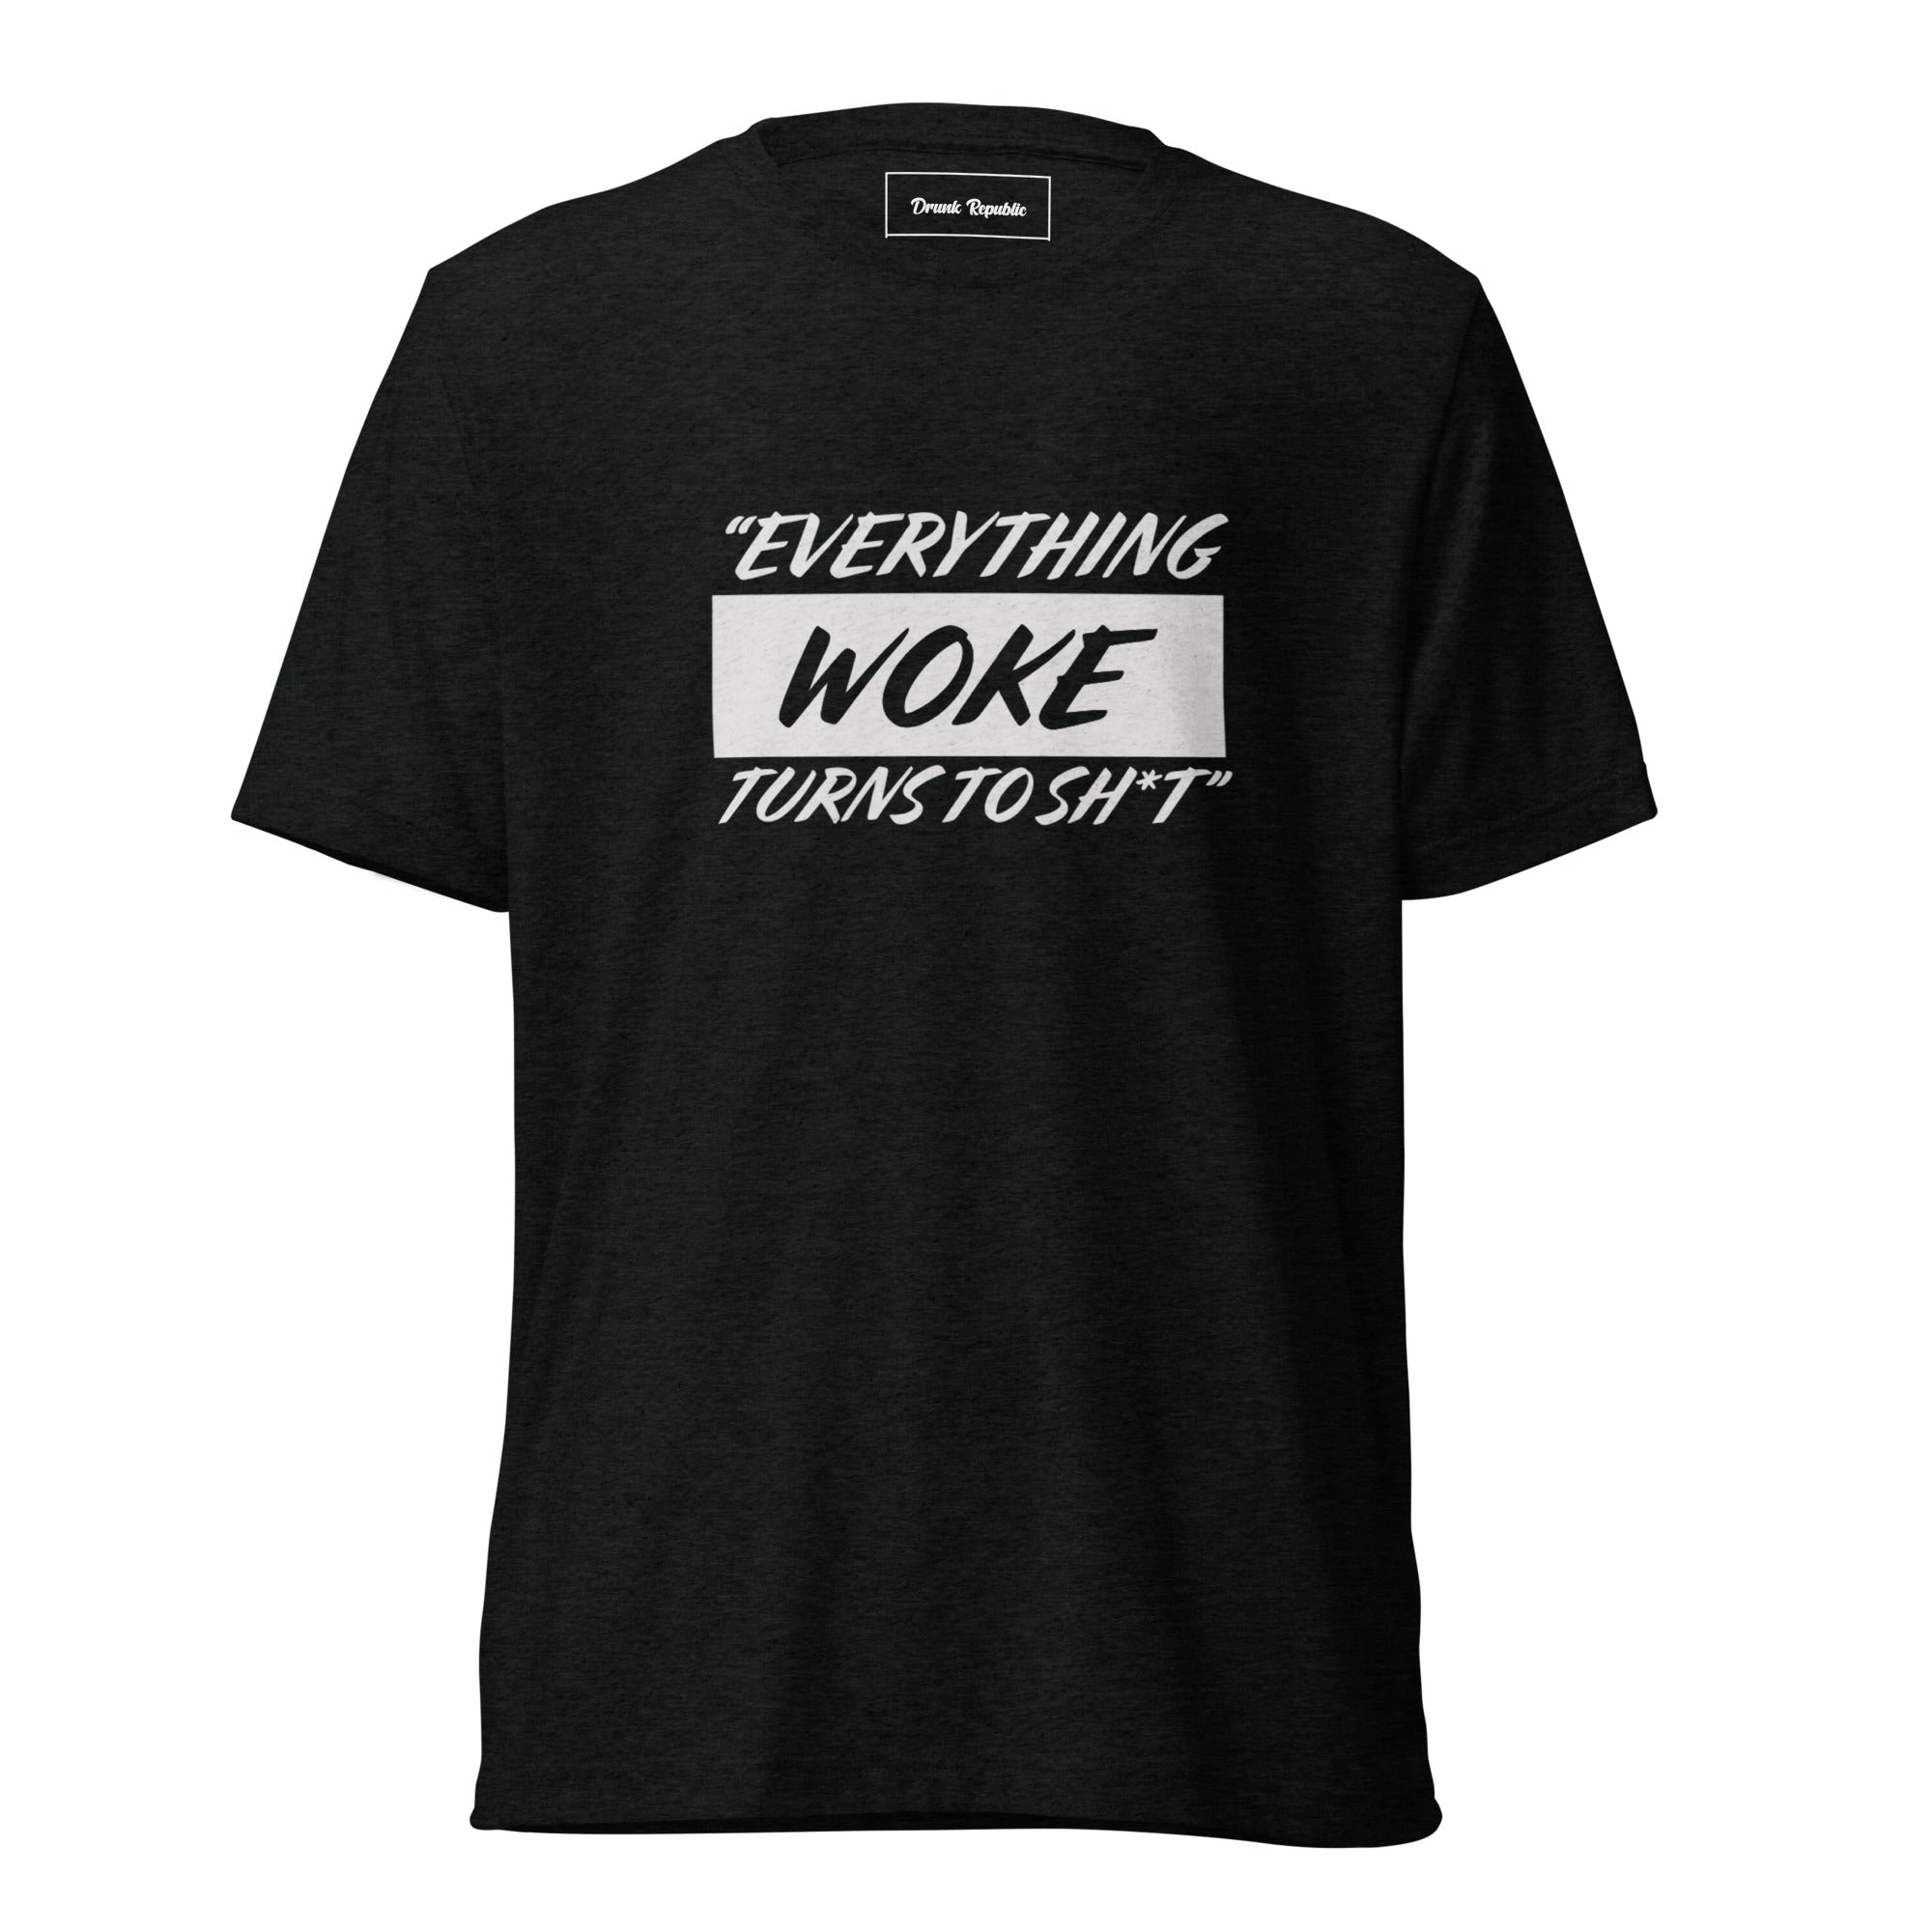 Everything Woke Turns to Sh*t T-Shirt